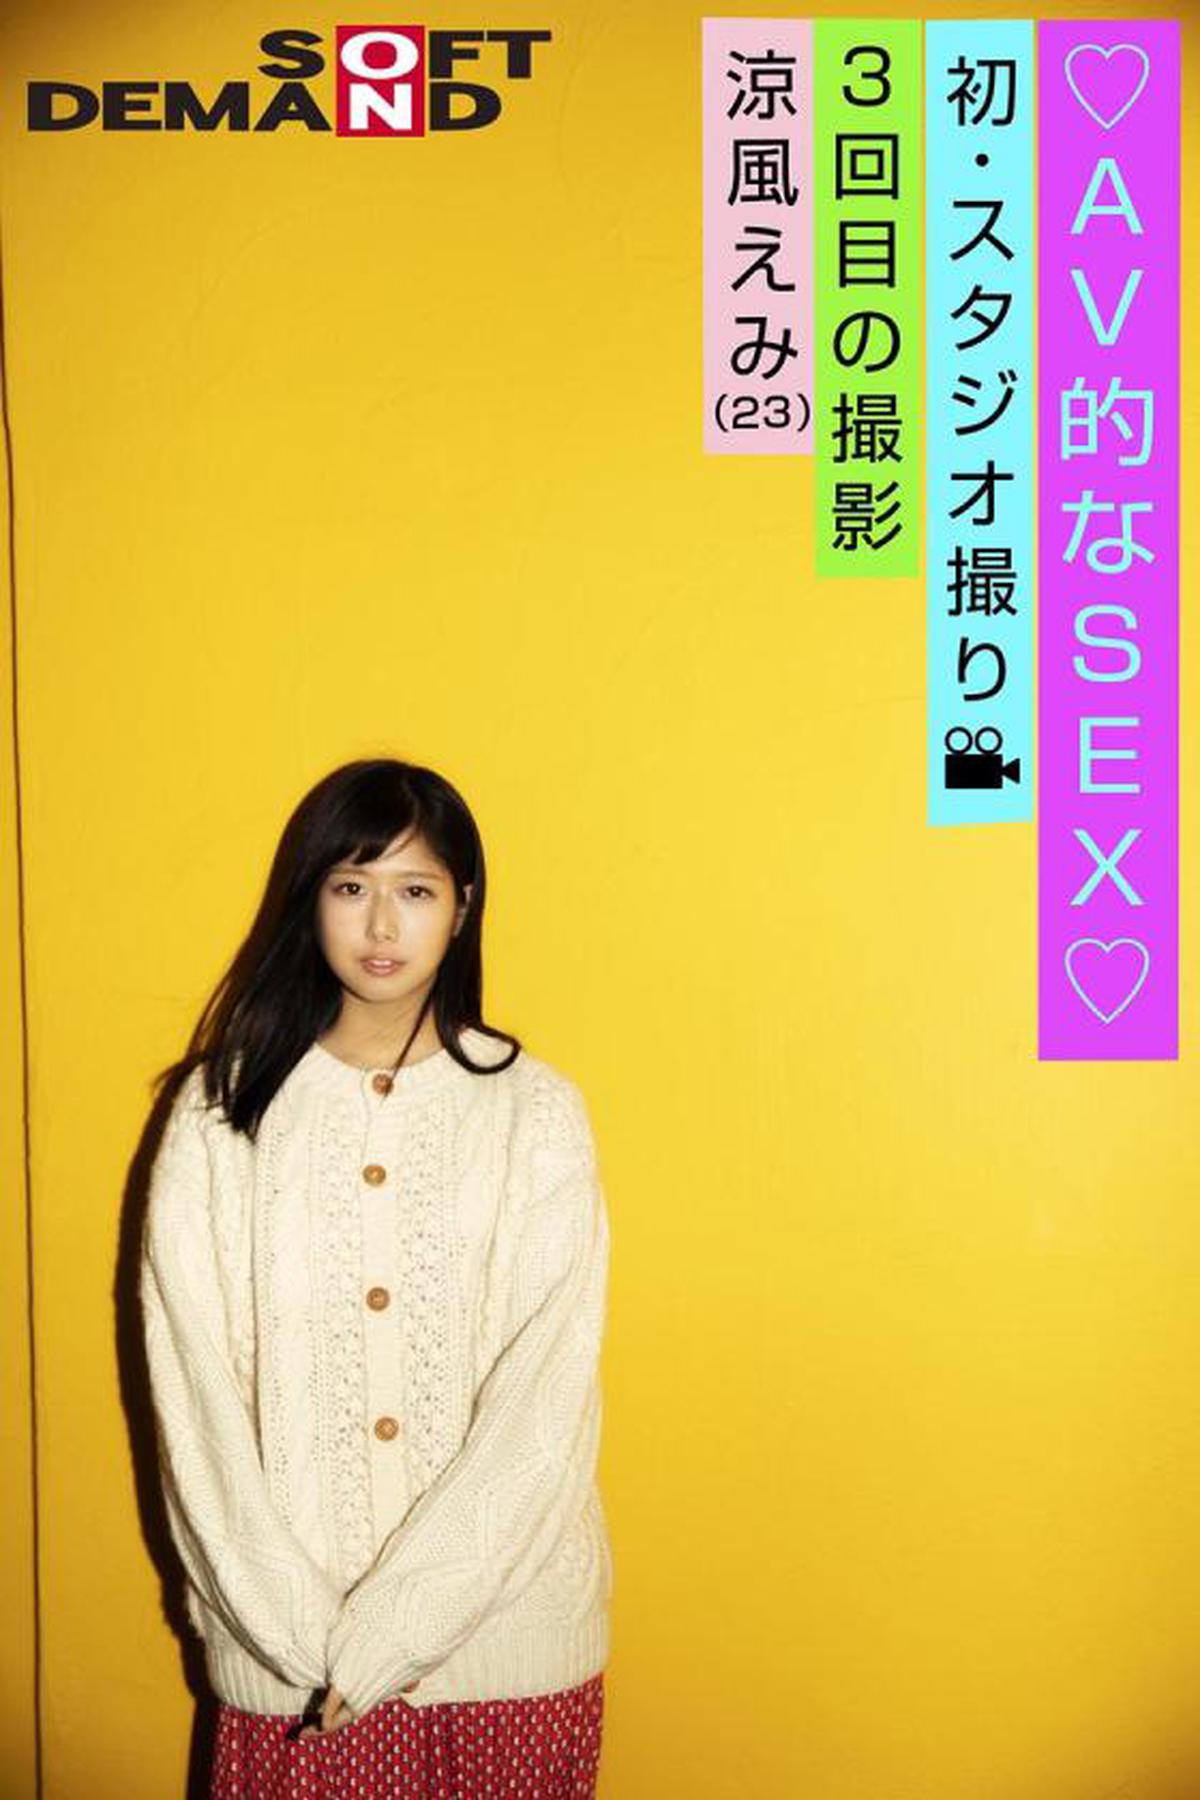 107EMOI-004 Chica emo / Tercer rodaje / Primer rodaje de estudio / SEXO AV / Suzukaze Emi (23) / En un lugar brillante / Bastante tensión